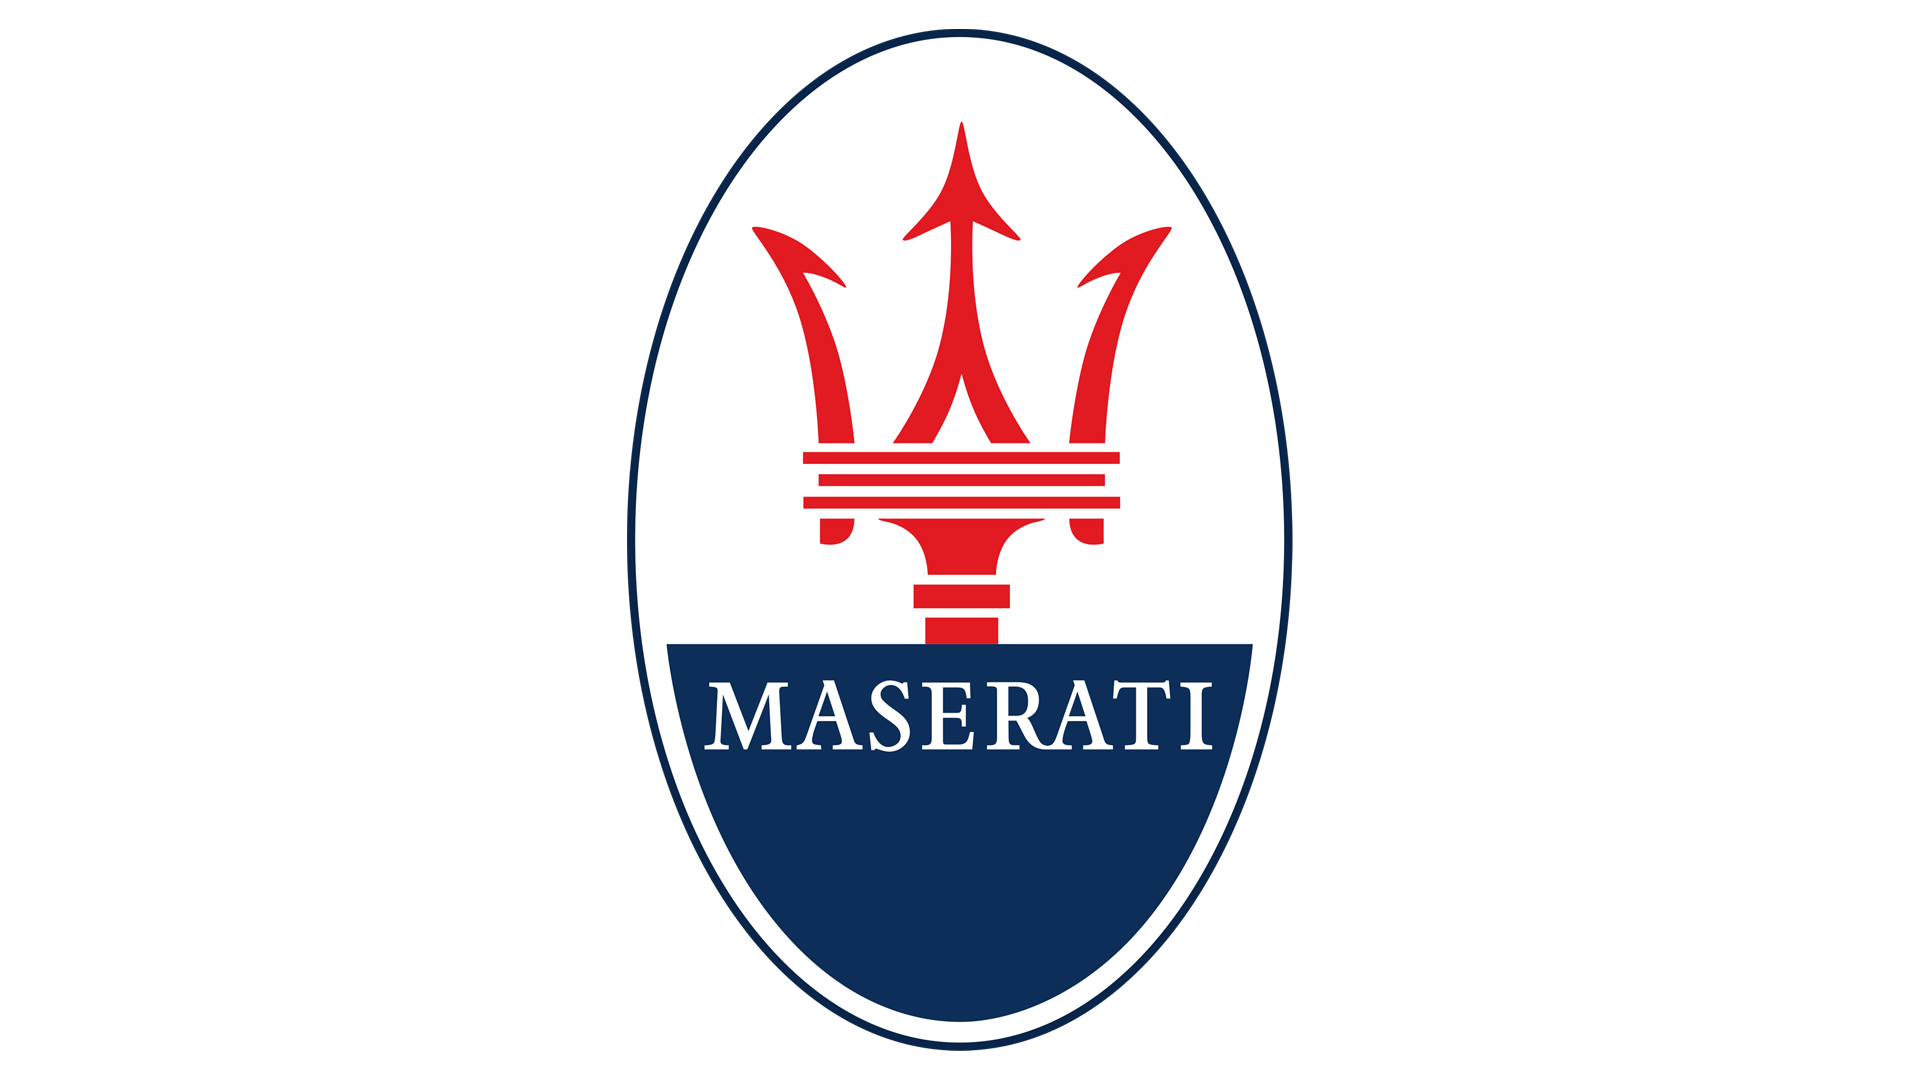 Maserati emblem 2